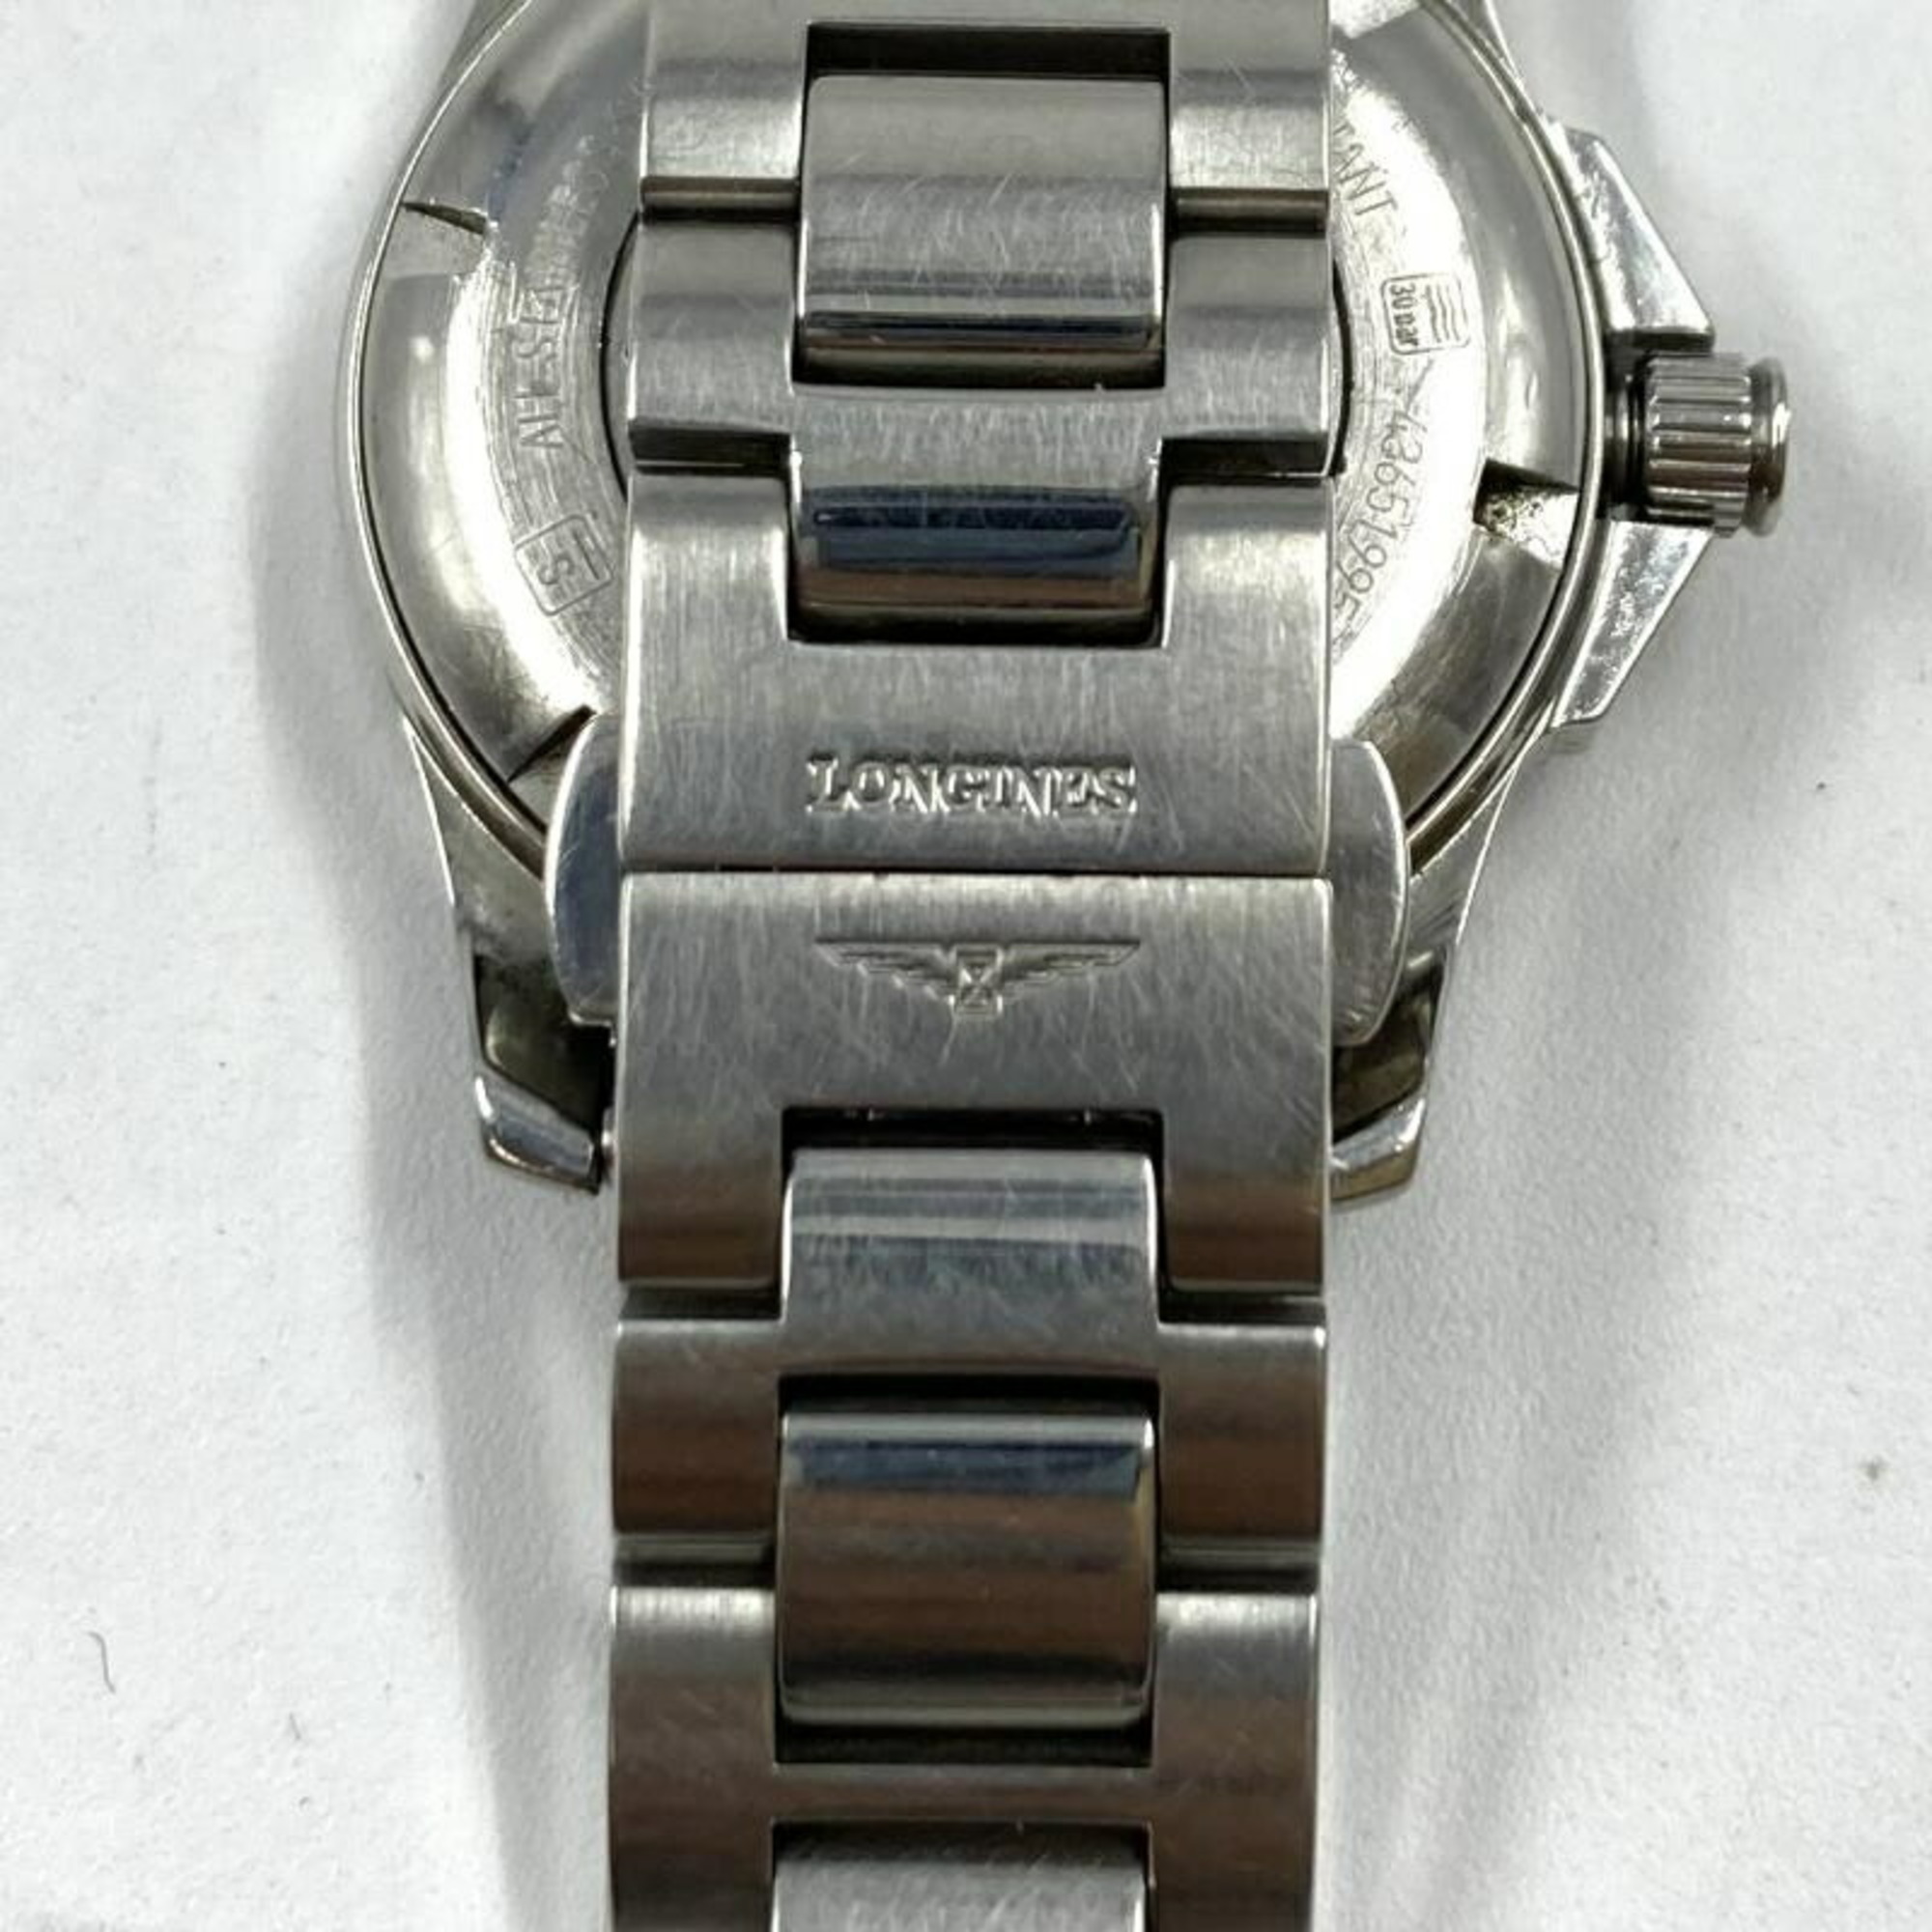 LONGINES CONQUEST L3.276.4 Wristwatch Automatic Longines Silver x Black